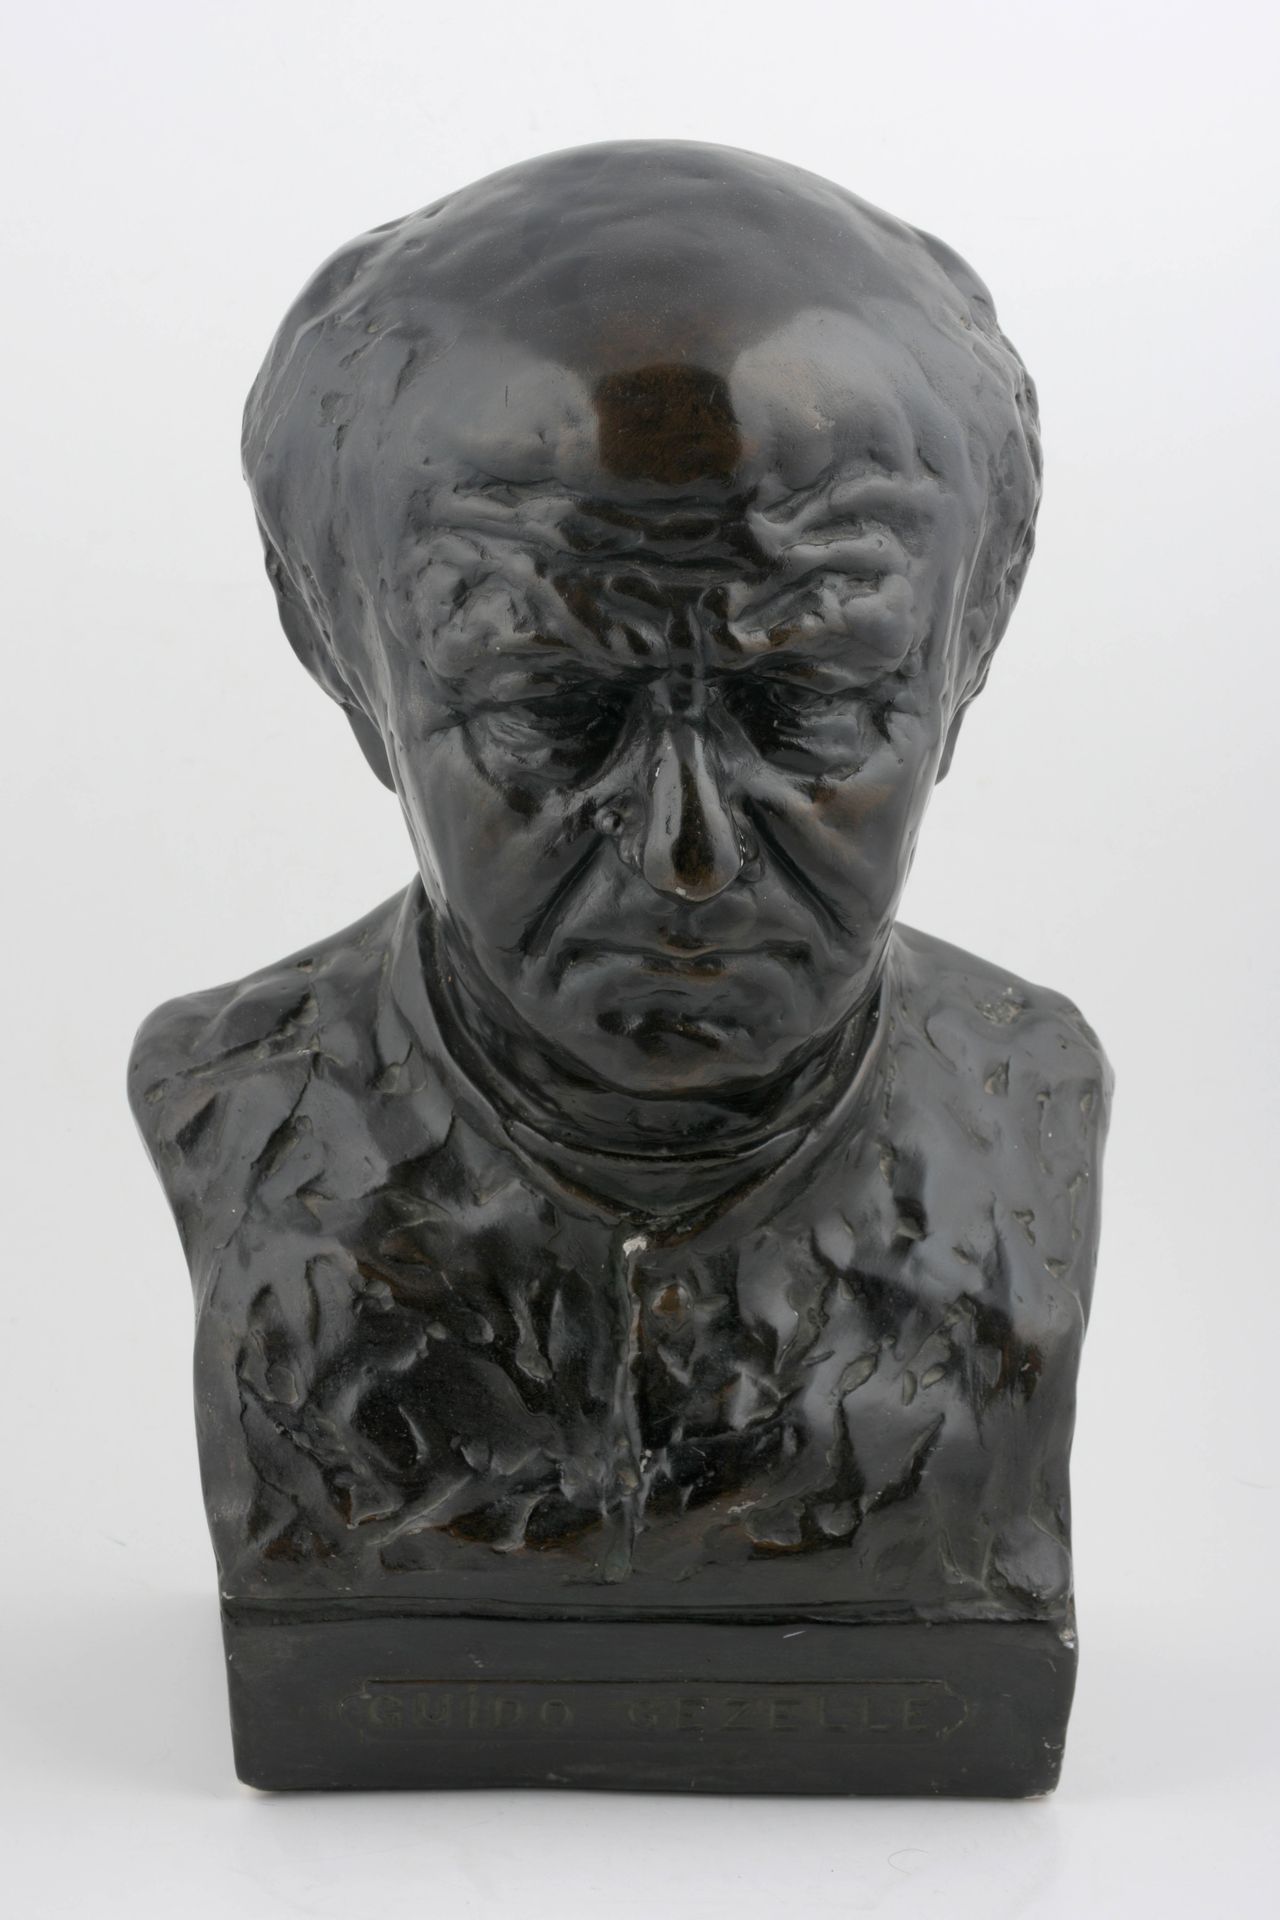 DE MAESTTE Busto di Guido Gezelle

(1921?) Busto di Plaasteren. Ca. 45 x 29 cm. &hellip;